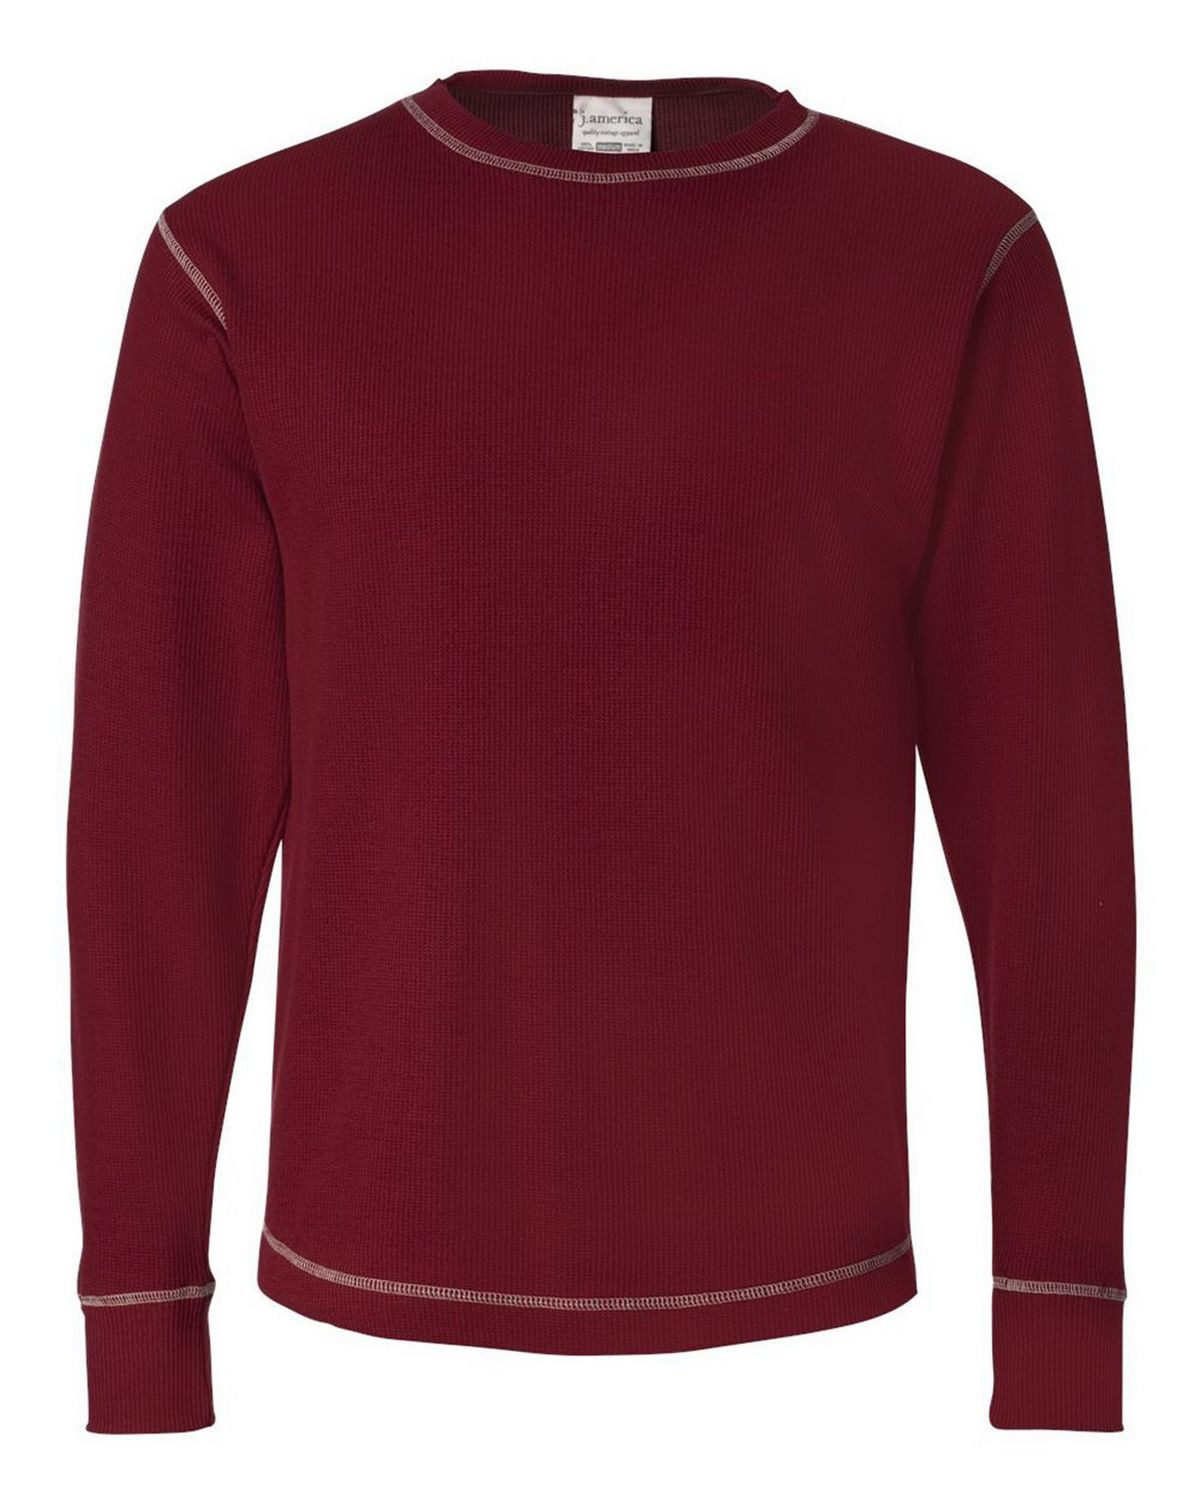 J America 8238 Men's Vintage Long Sleeve Thermal T-Shirt - Simply Red/ Vintage White - S #vintage